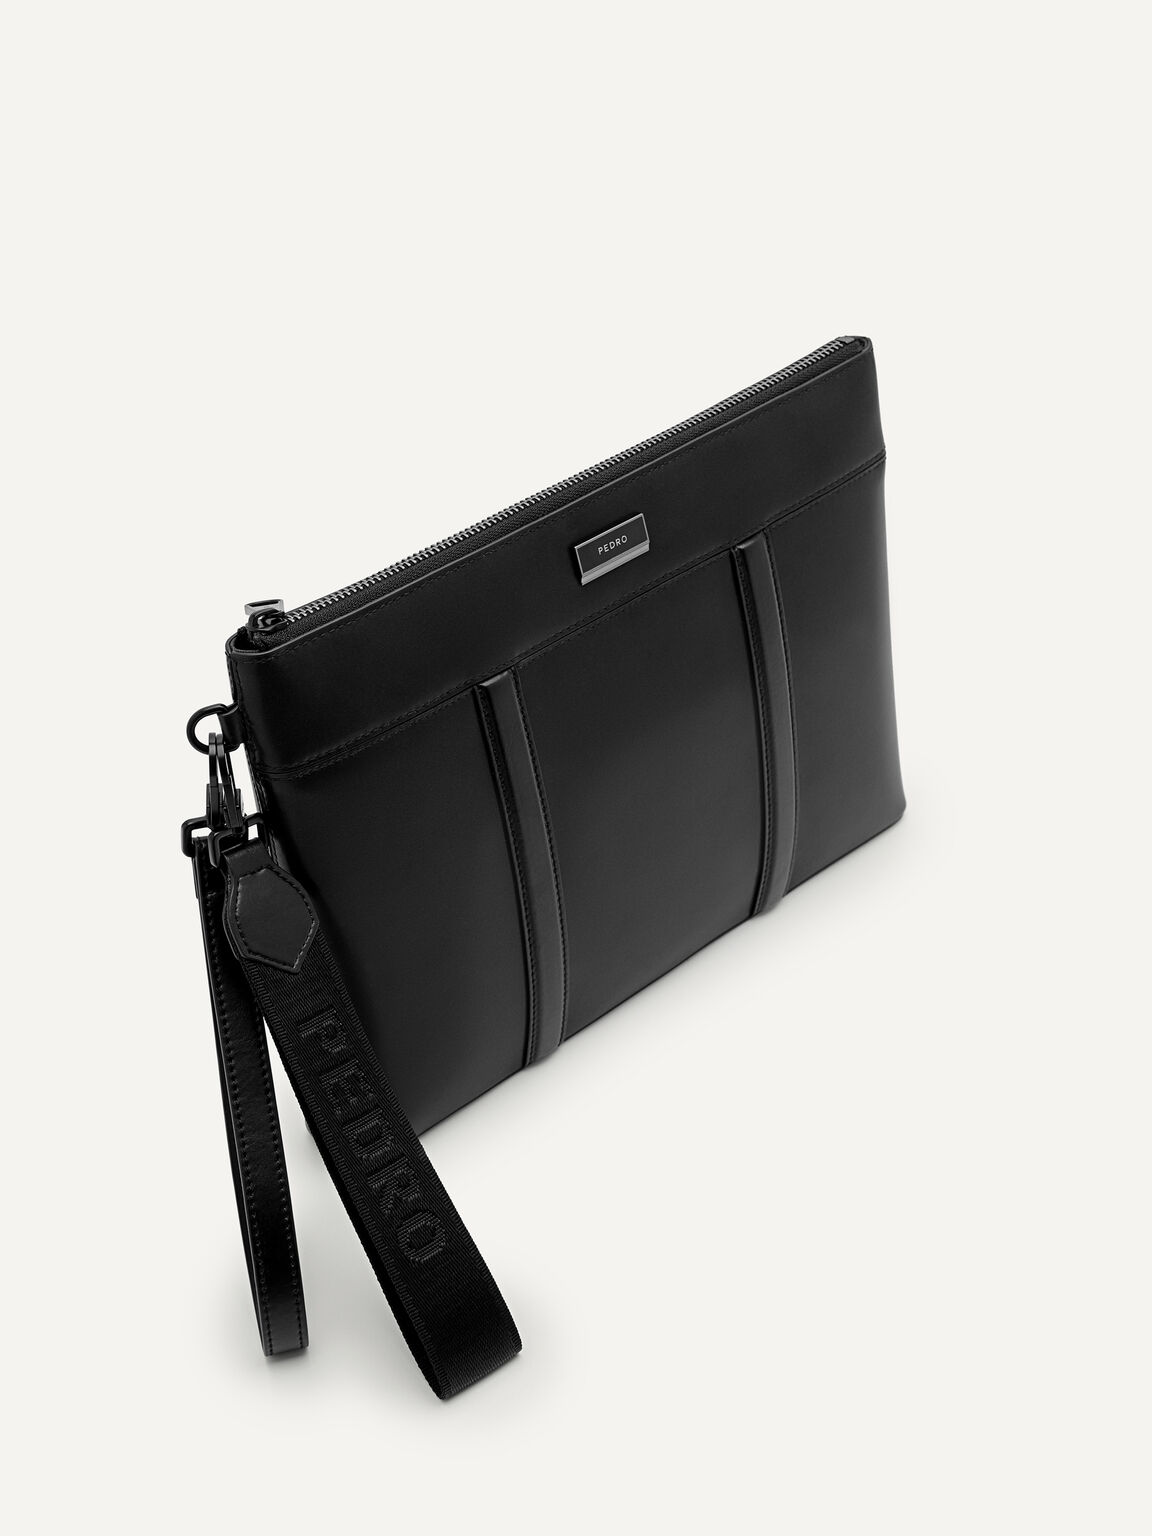 Allen Leather Portfolio Bag, Black, hi-res